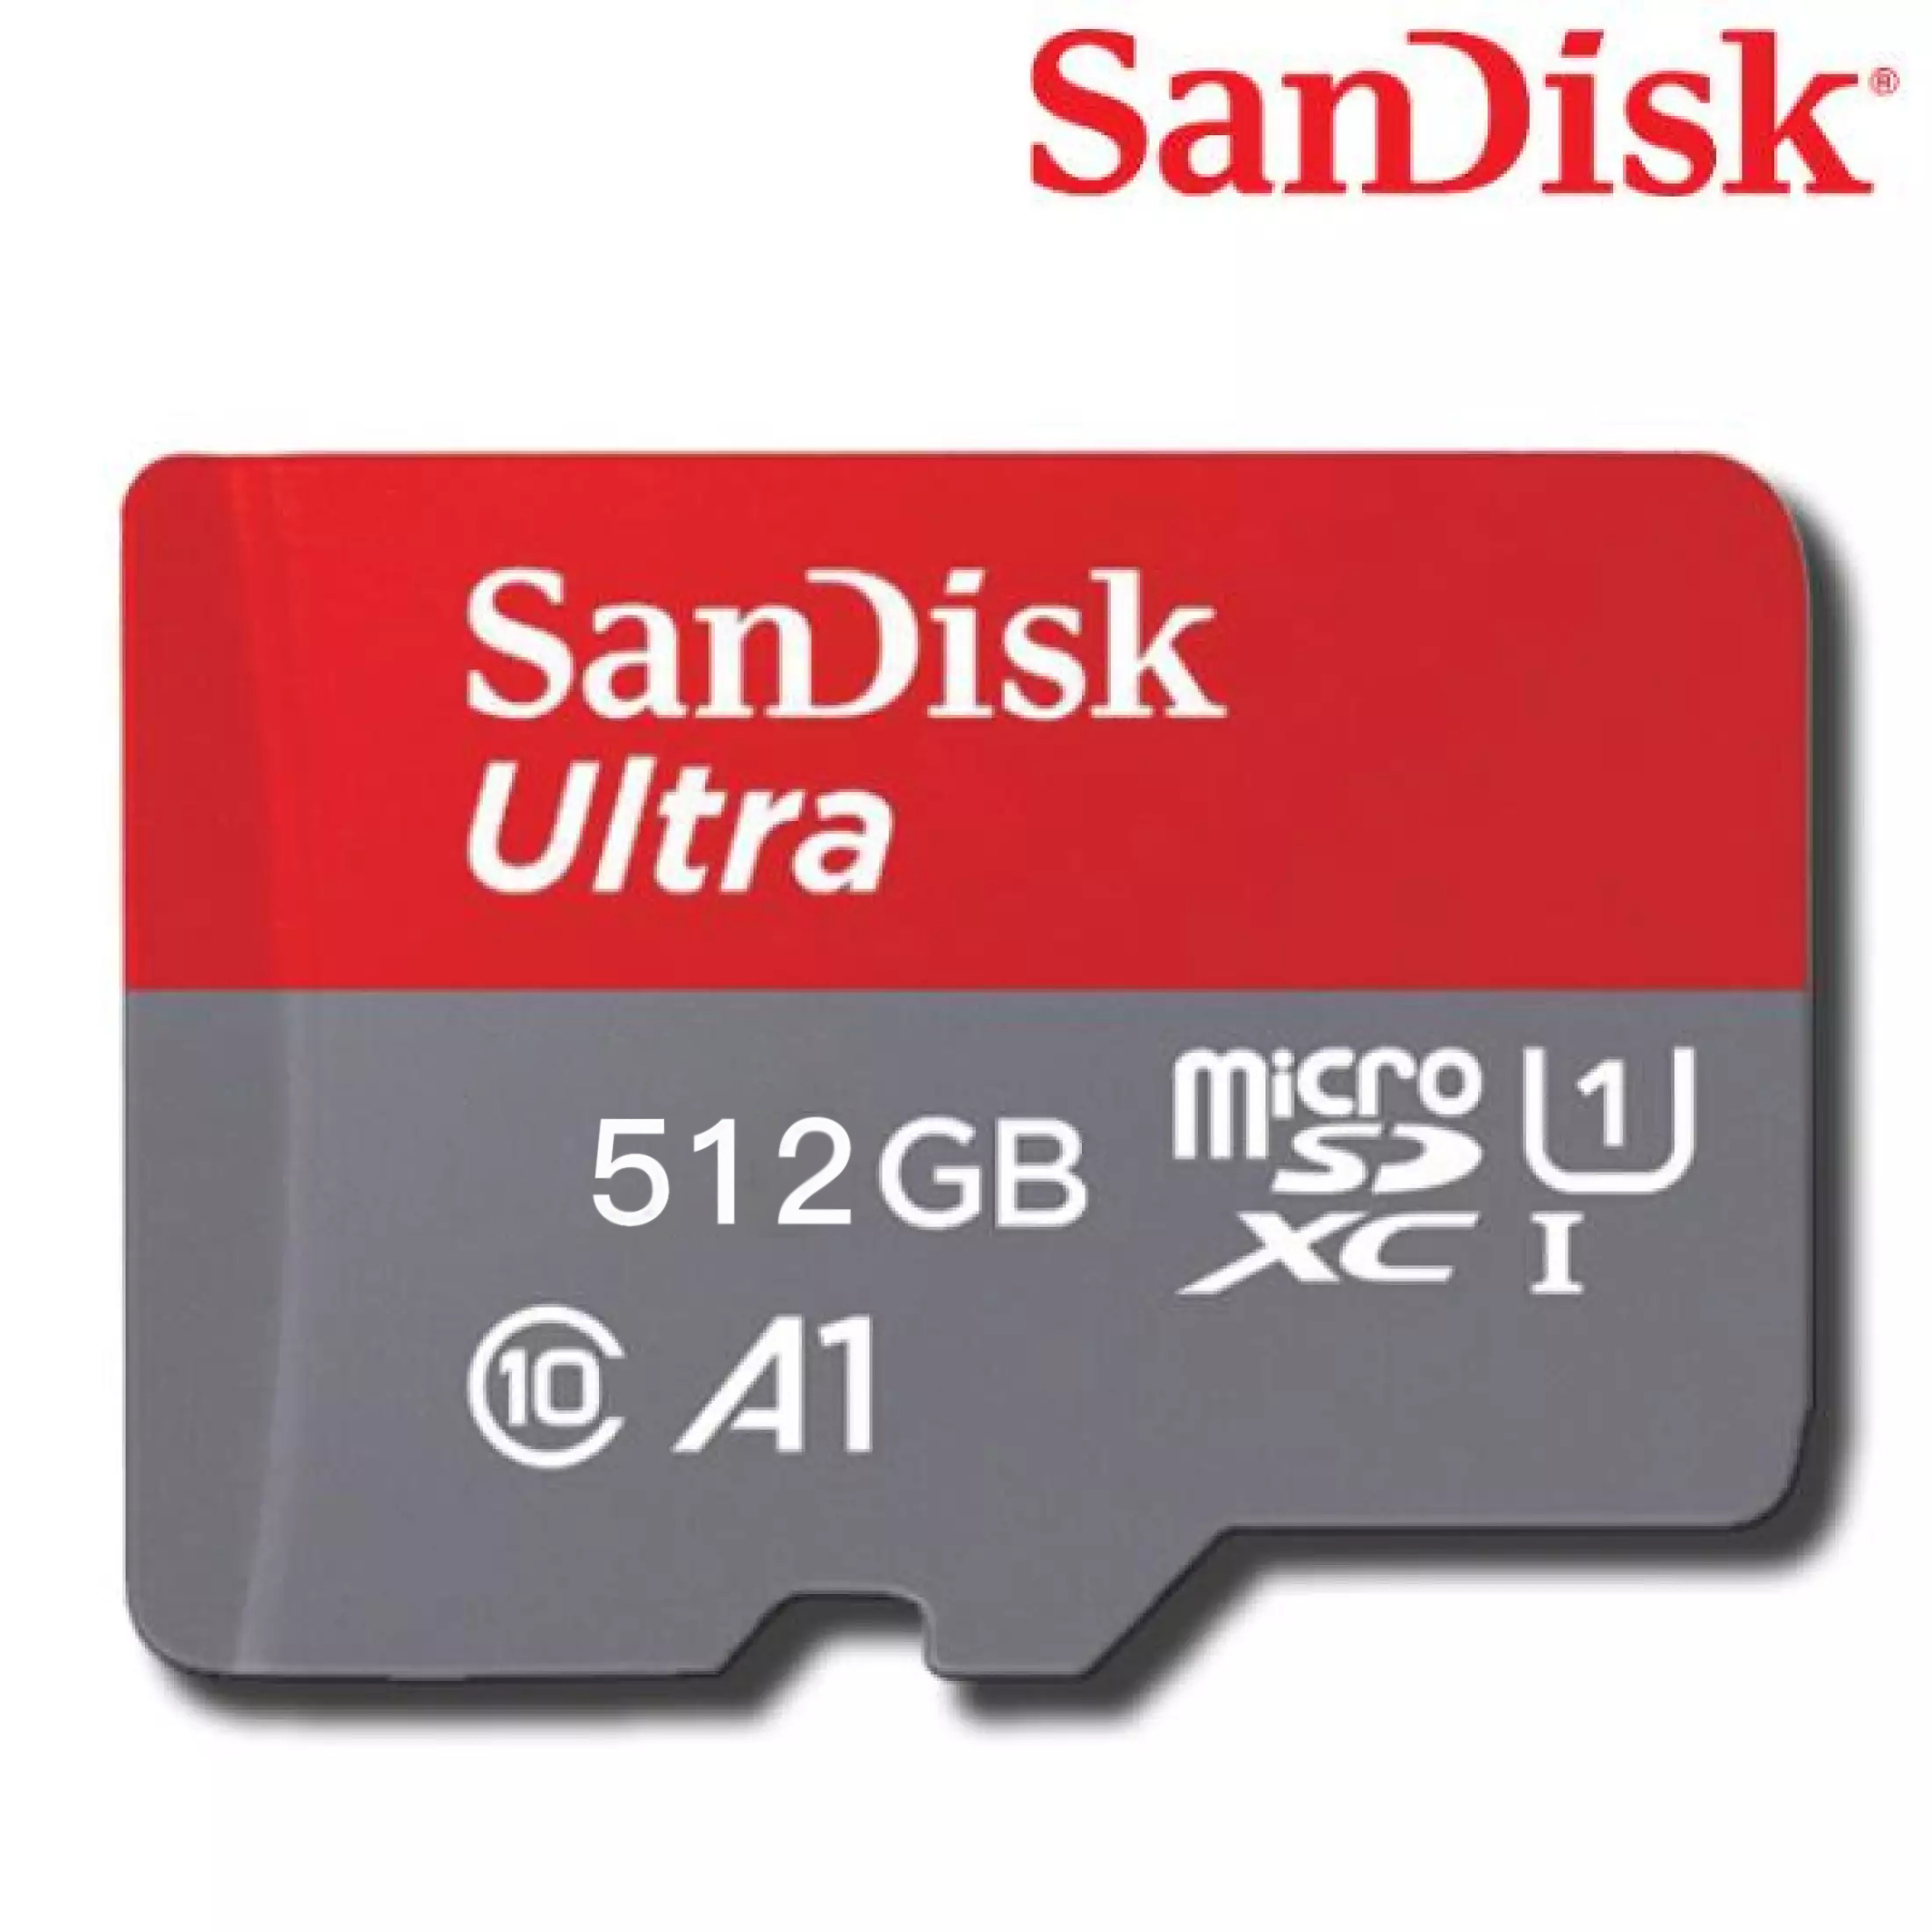 Sandisk MicroSD Card Ultra Class 10 512GB แซนดิส เมมโมรี่การ์ด ไอโครเอสดีการ์ด